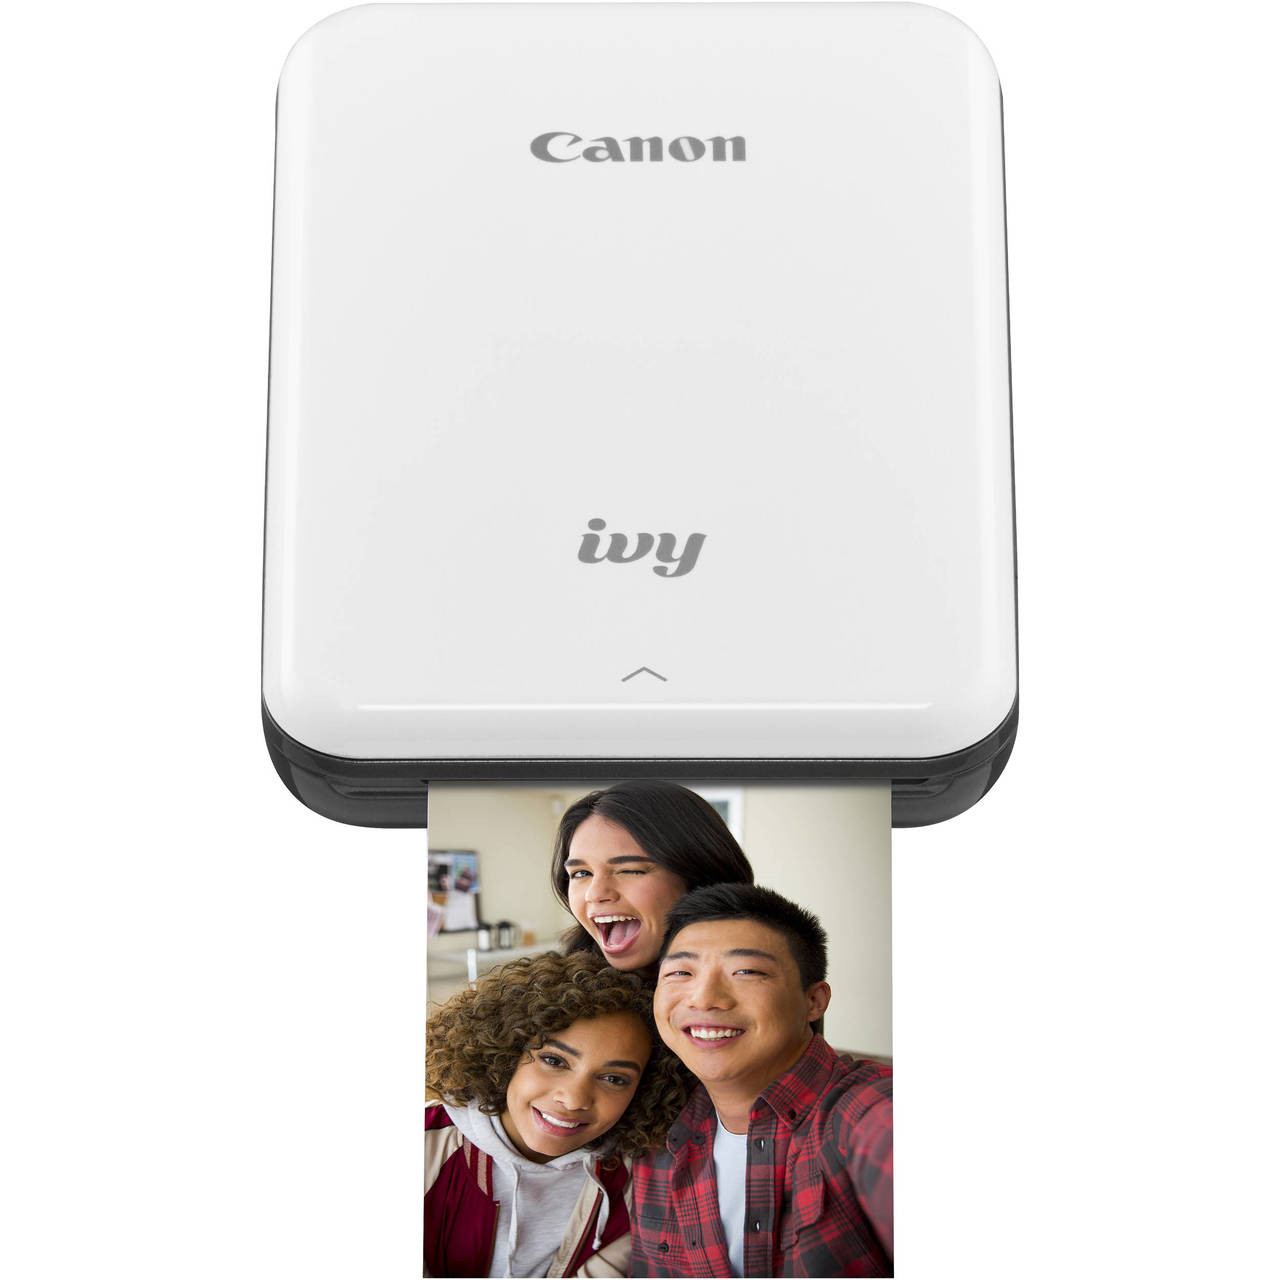 Canon IVY Wireless Bluetooth Mini Photo Printer Review - Nerd Techy